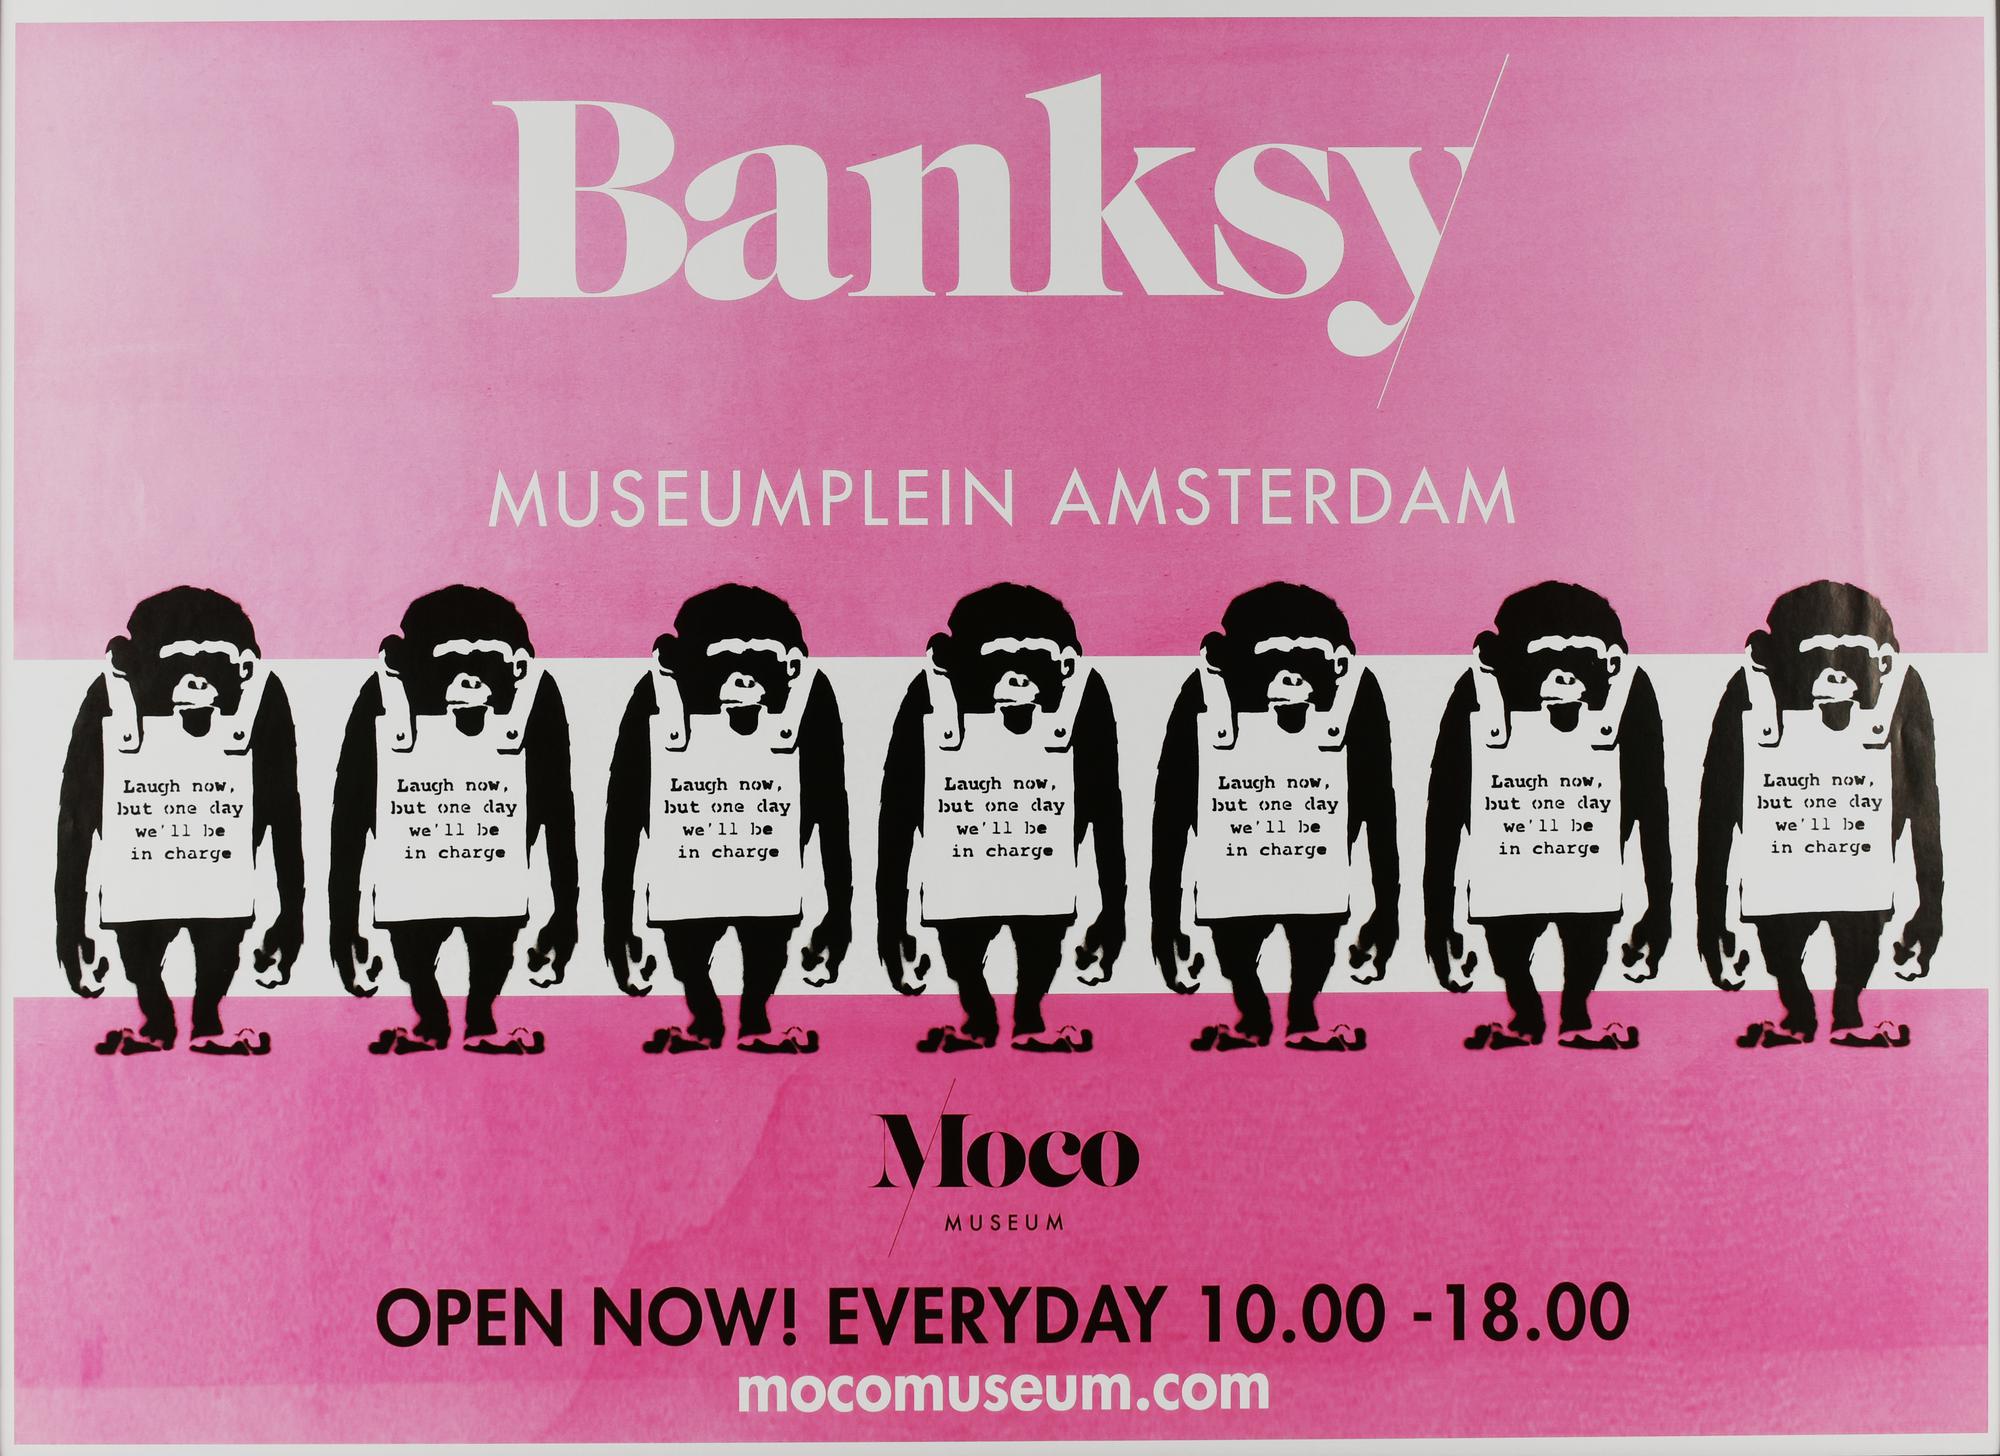 BANKSY MOCO MUSEUM, 2017 stampa litografica offset su carta, cm 84x59,5